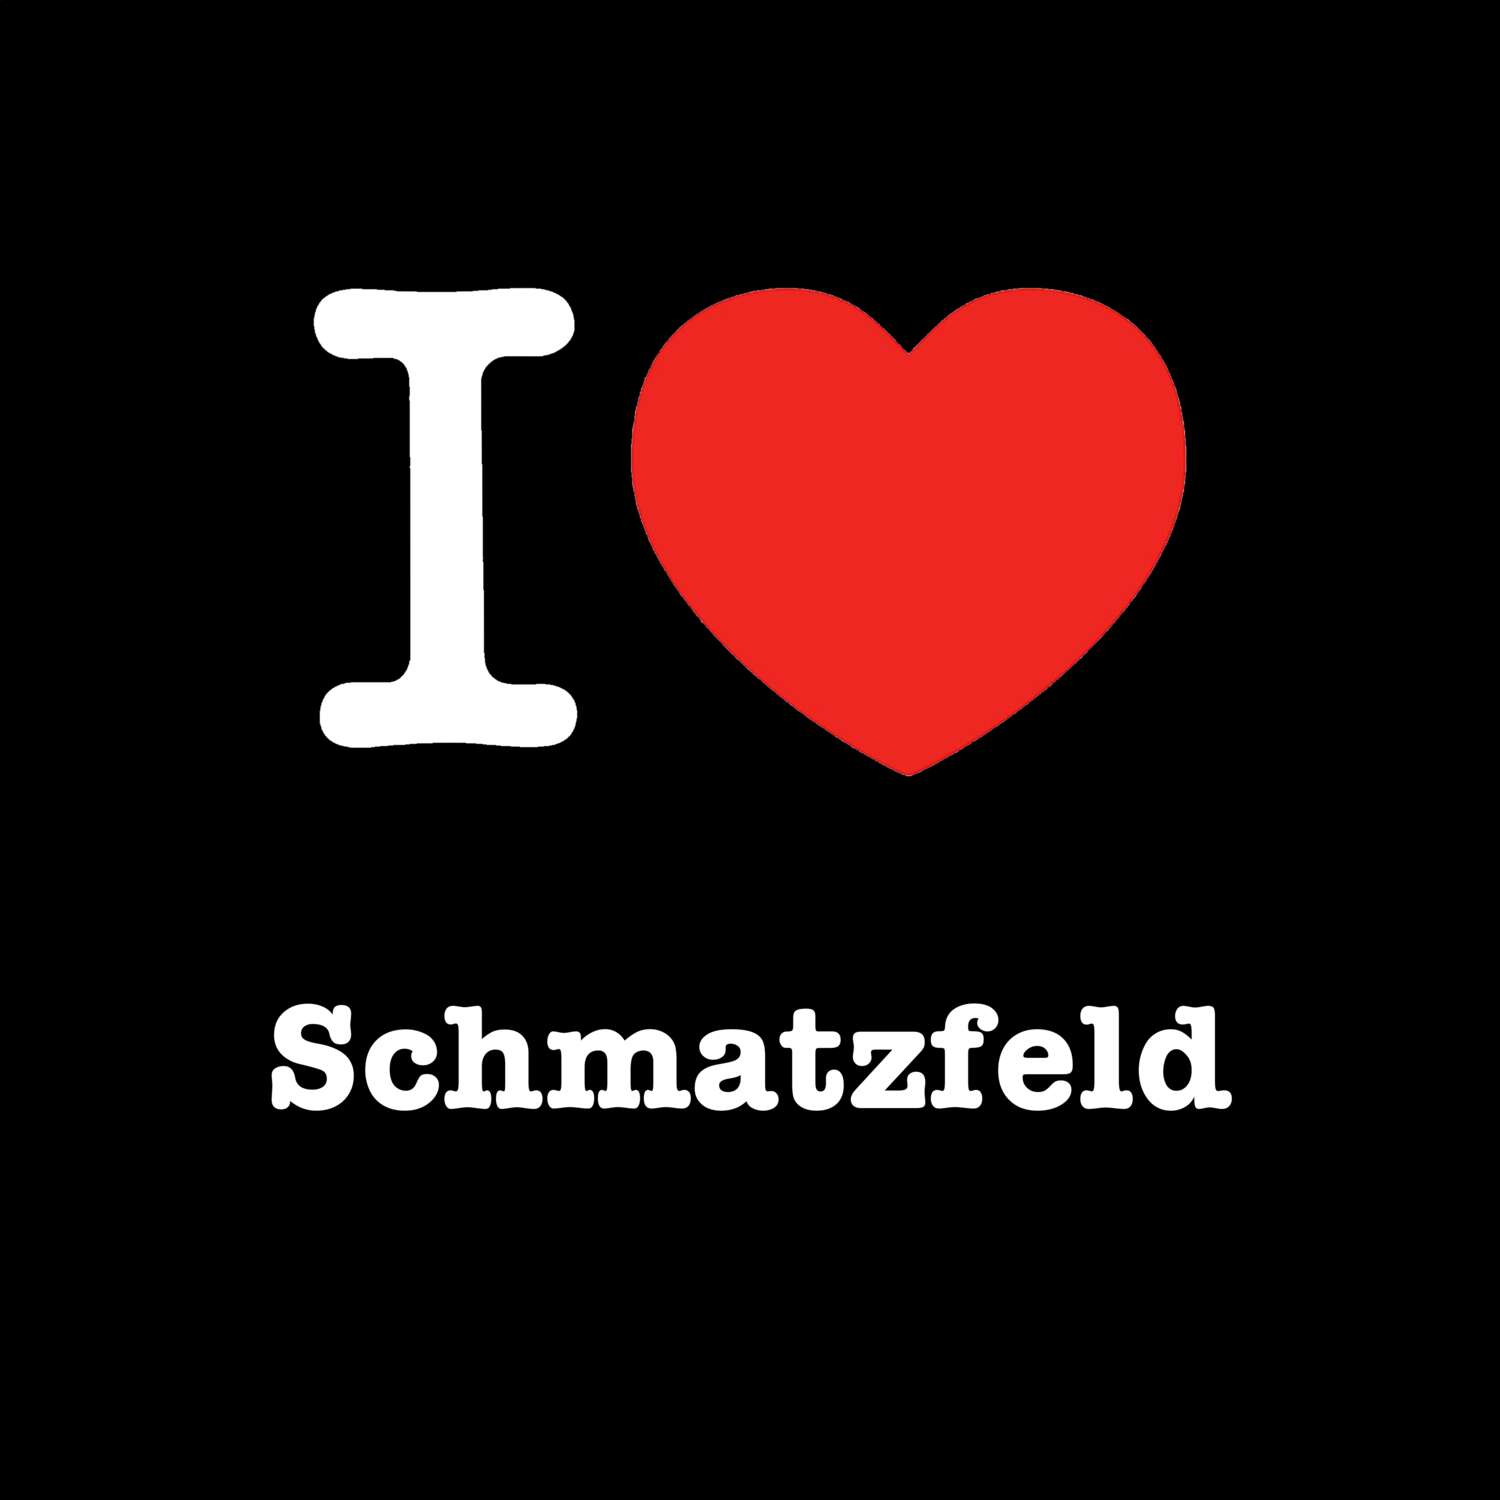 Schmatzfeld T-Shirt »I love«